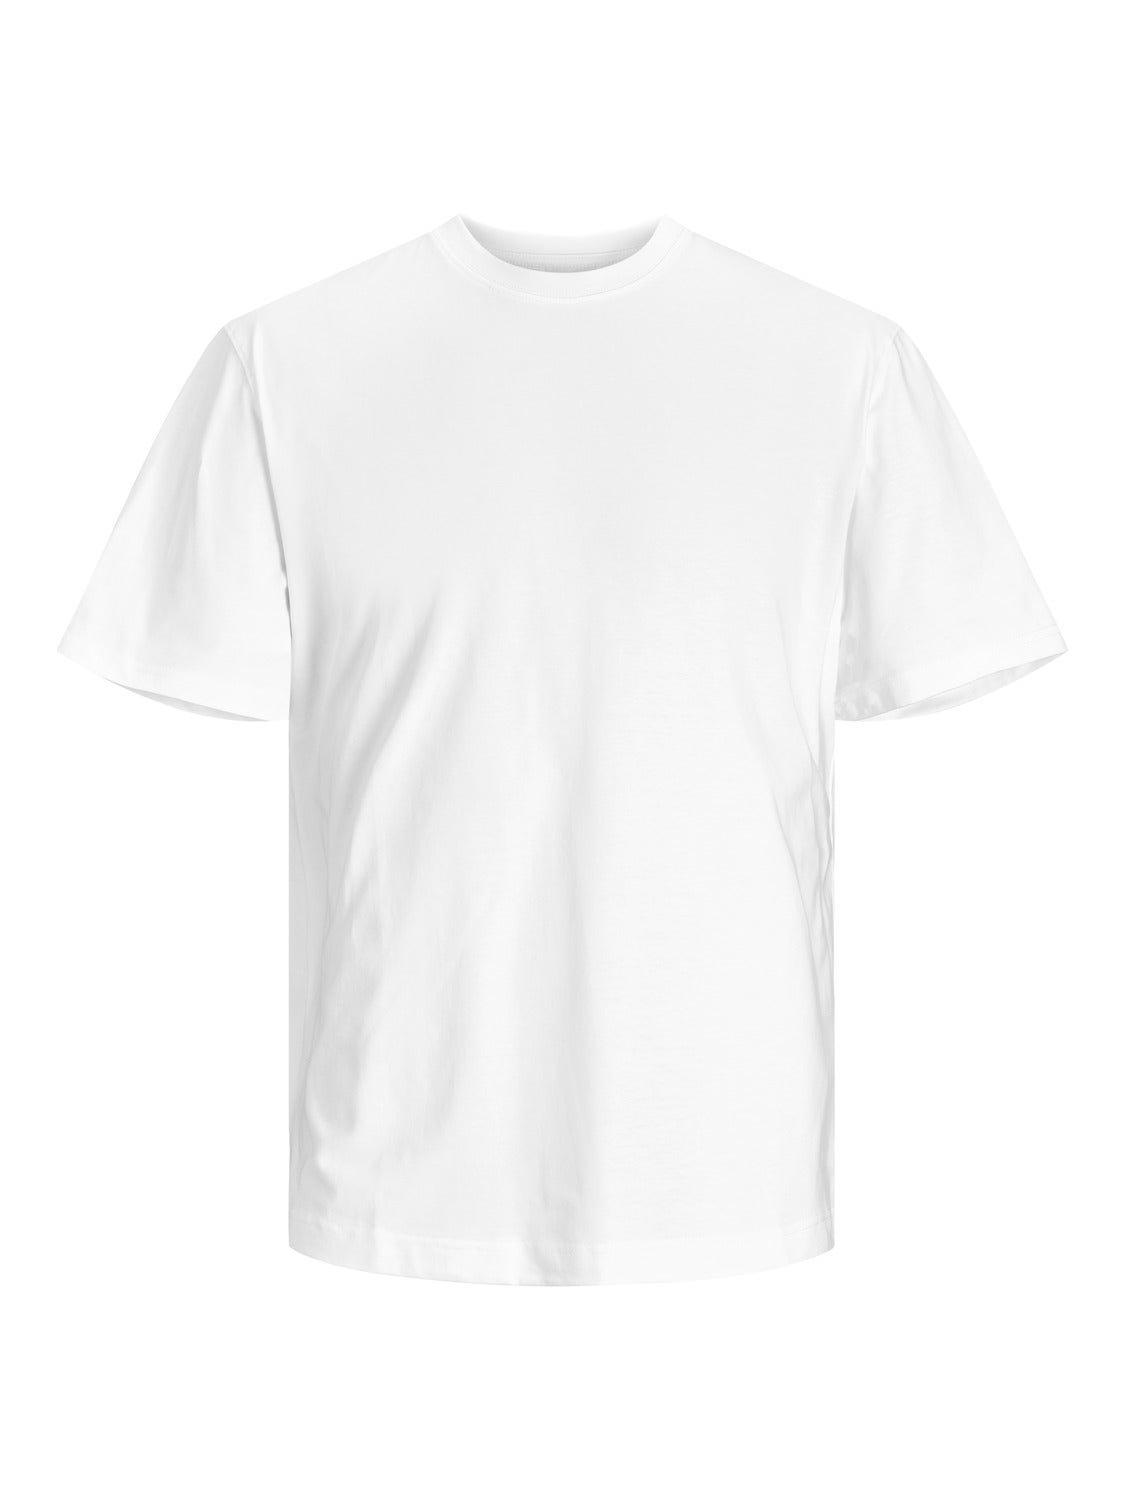 White | T-shirt Jack neck Jones® Crew & | Plain